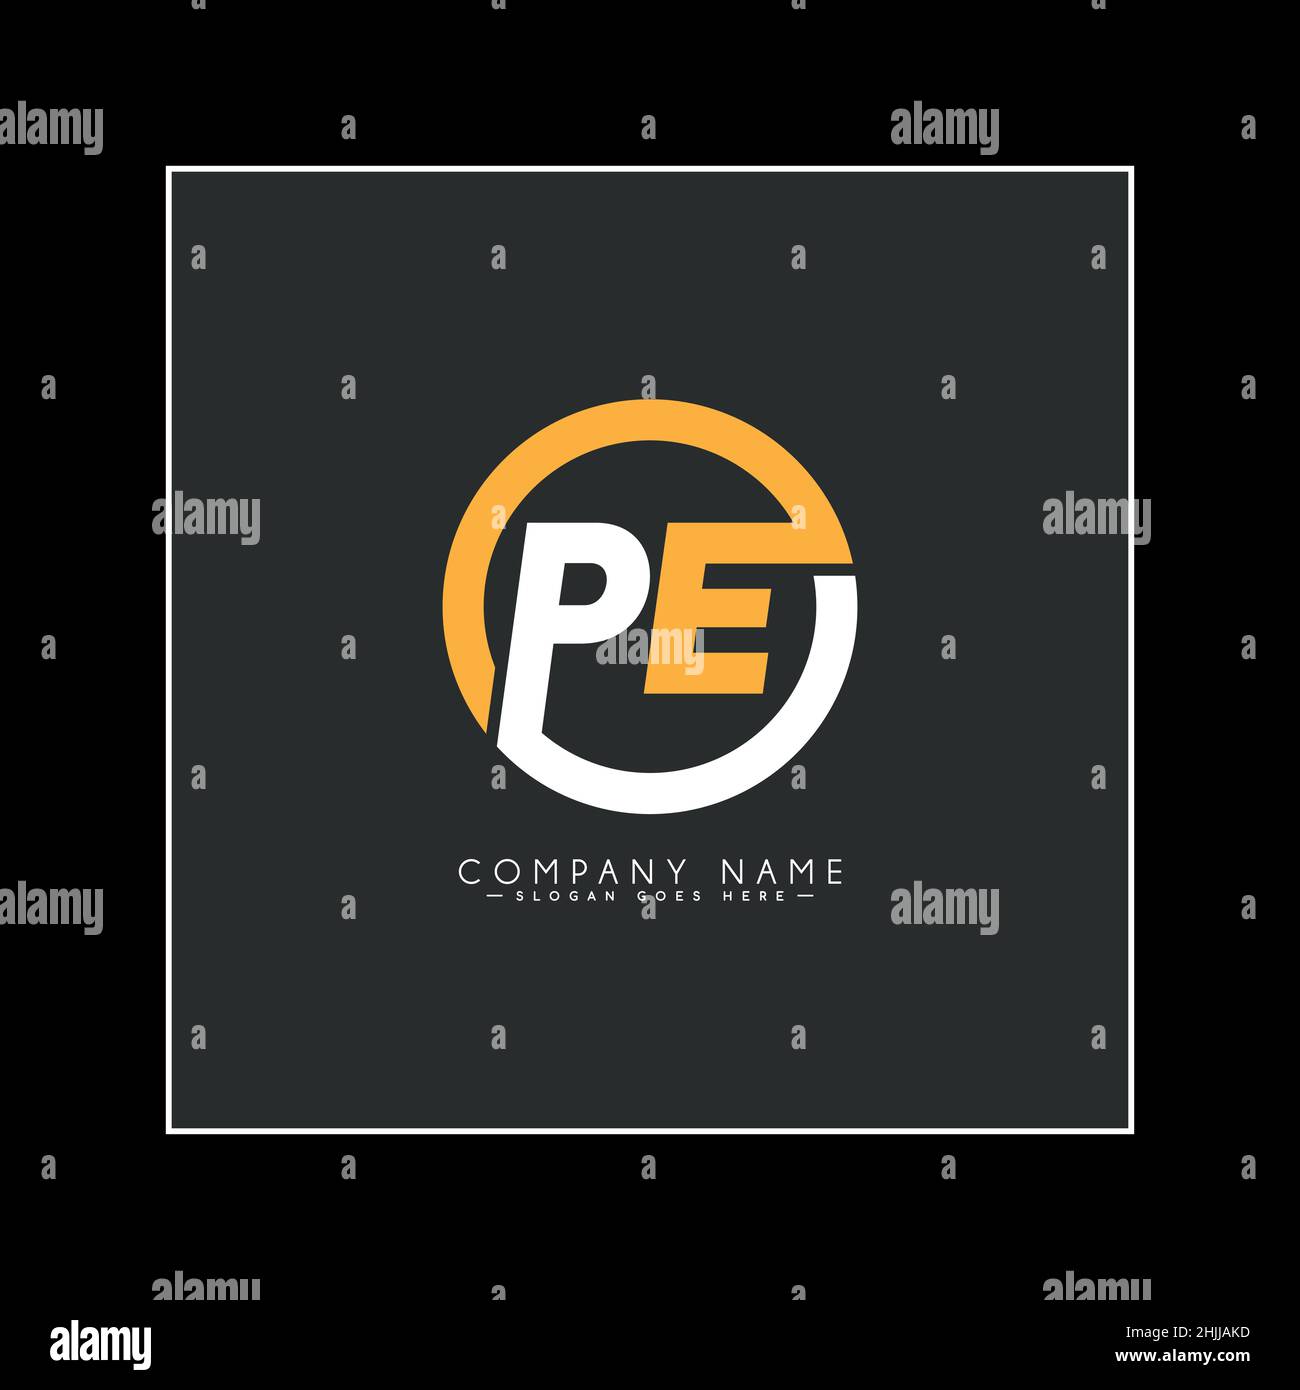 Initial Letter PE Logo - Minimal Business Logo for Alphabet P and E Stock Vector